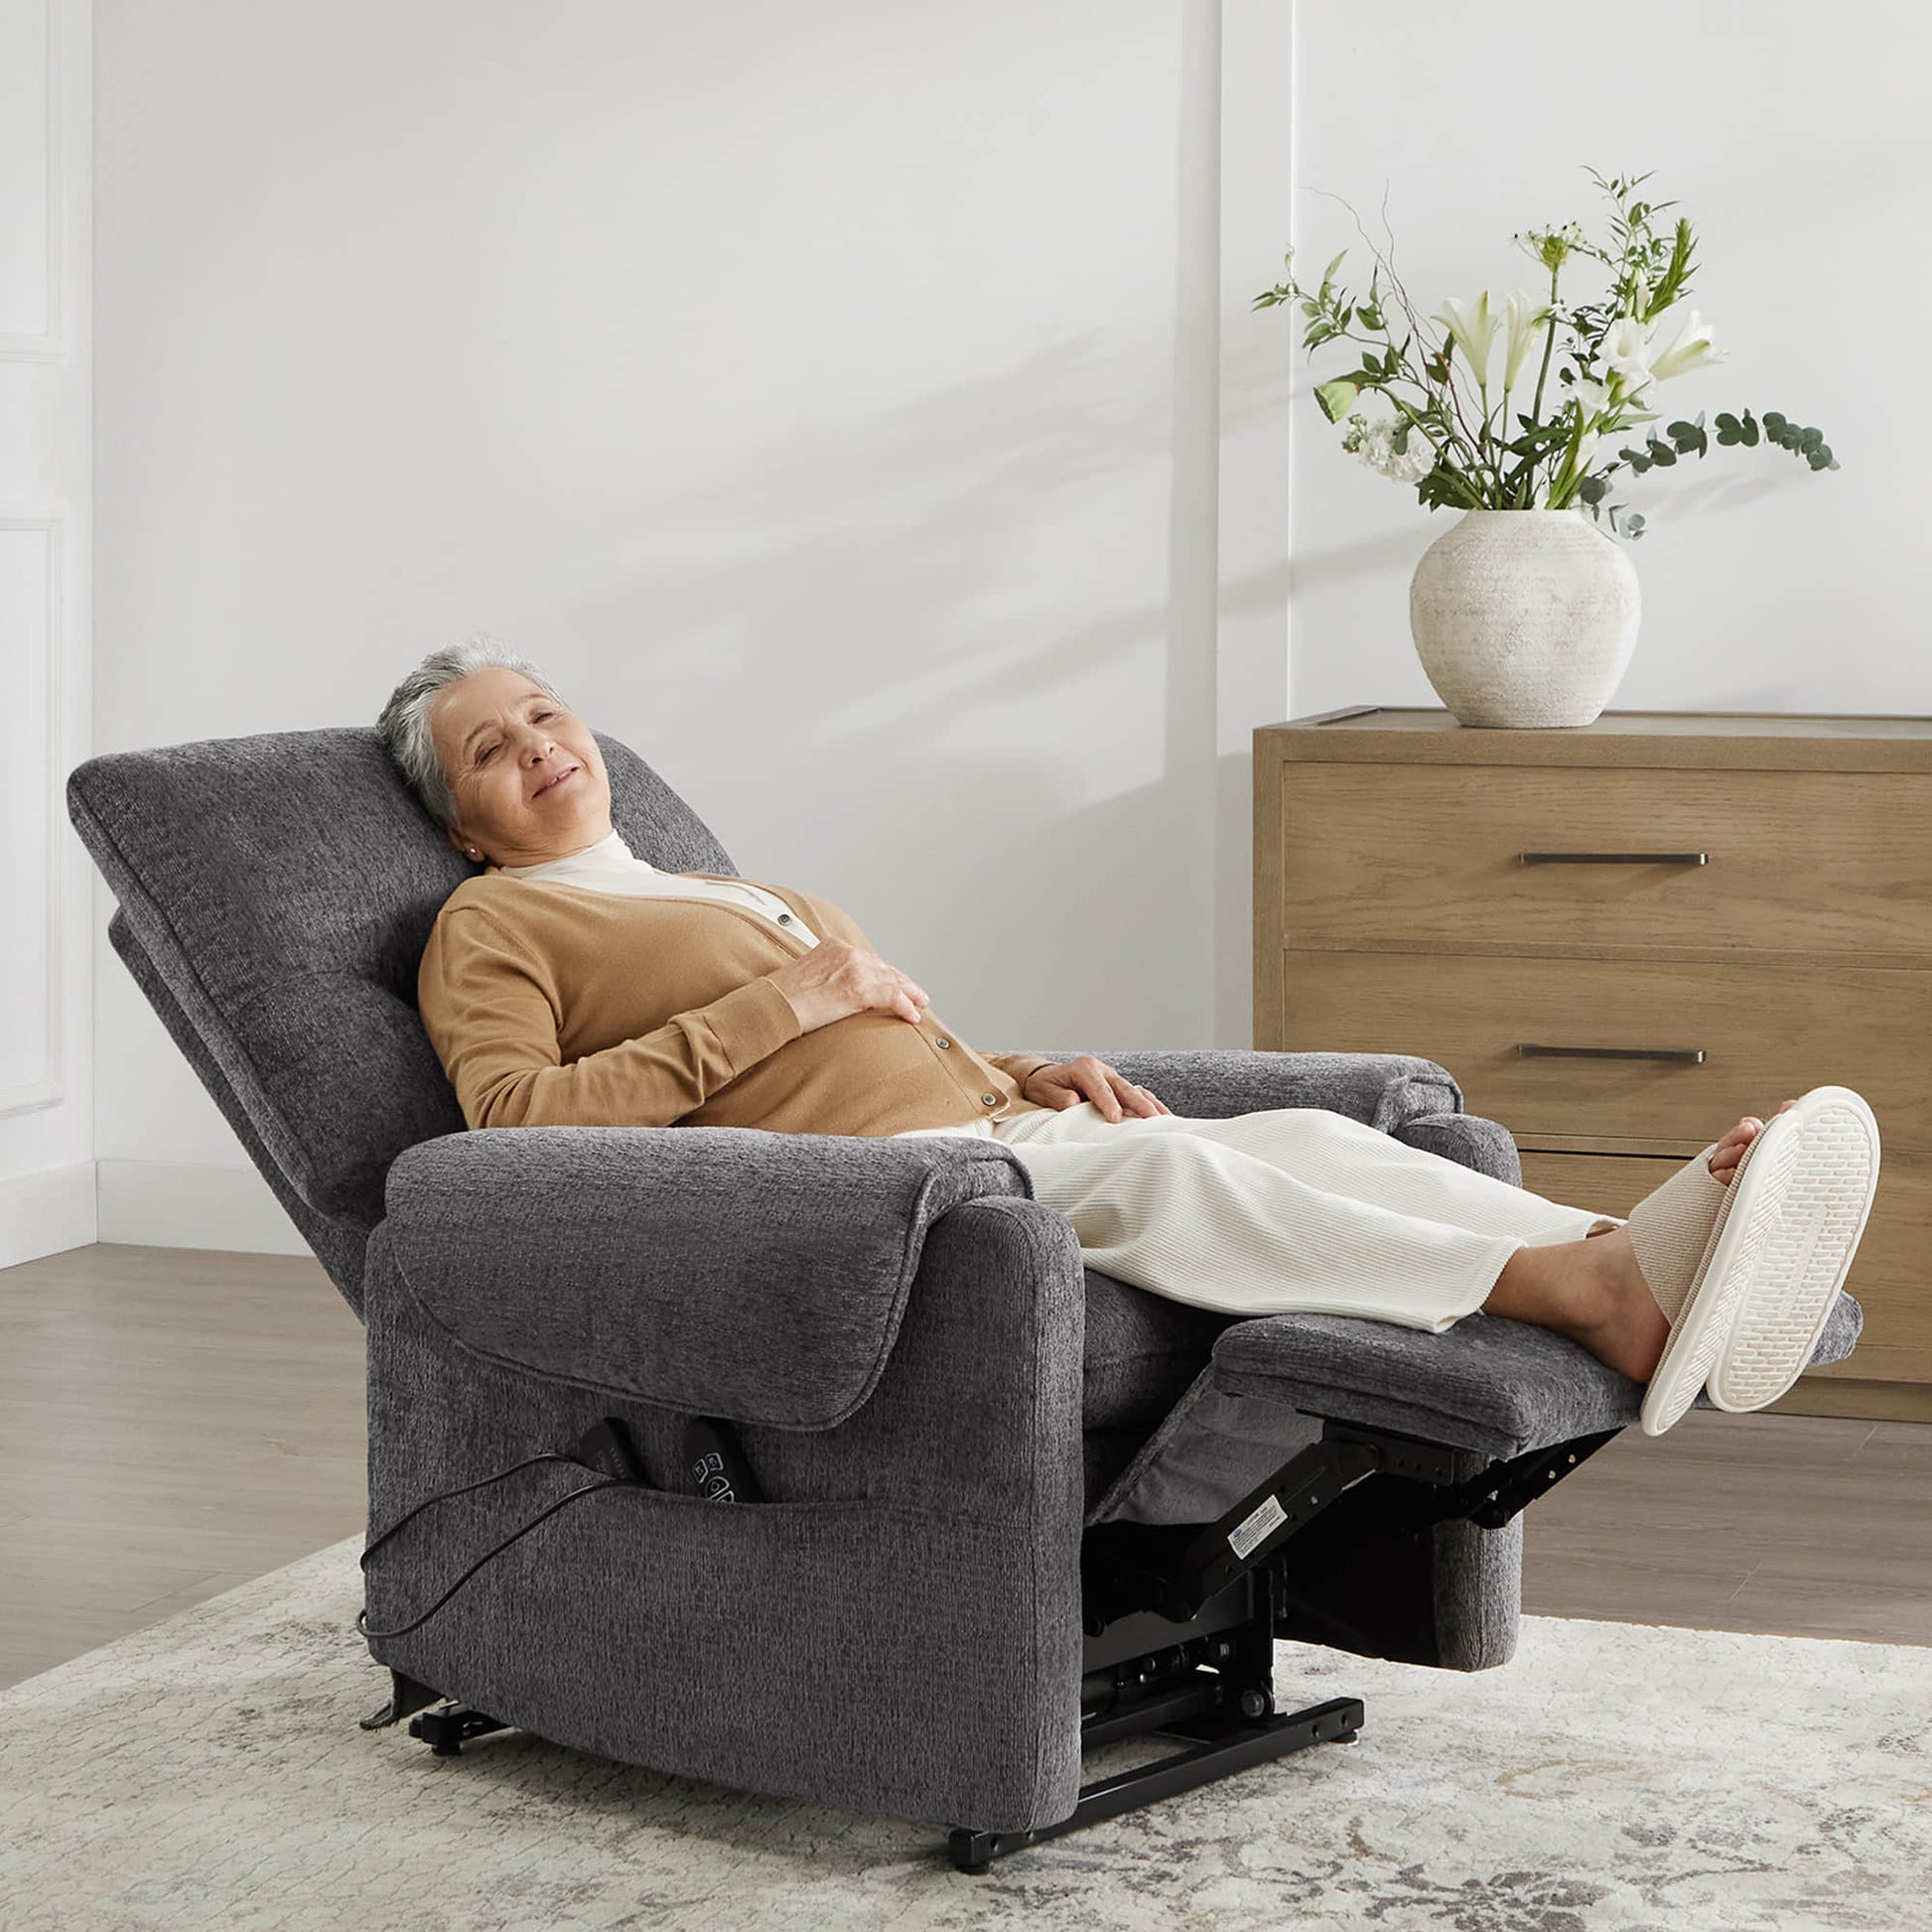 CHITA LIVING-Coro Power Lift Chair Recliner For Elderly-Lift Chair-Chenille Fabric-Grey-